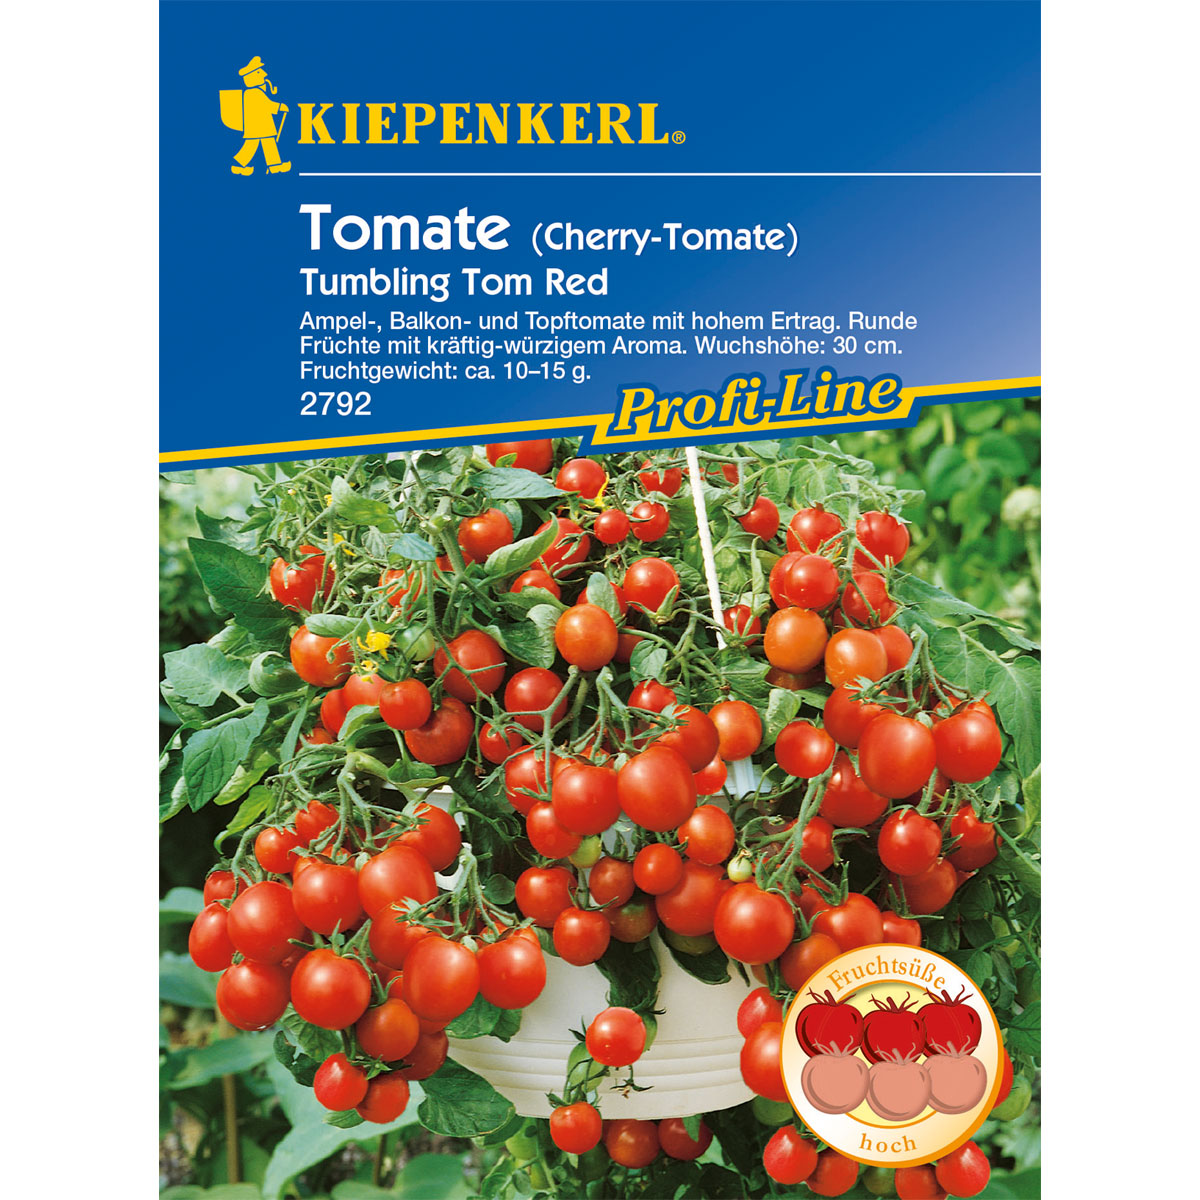 Cherry-Tomate „Tumbling Tom Red“